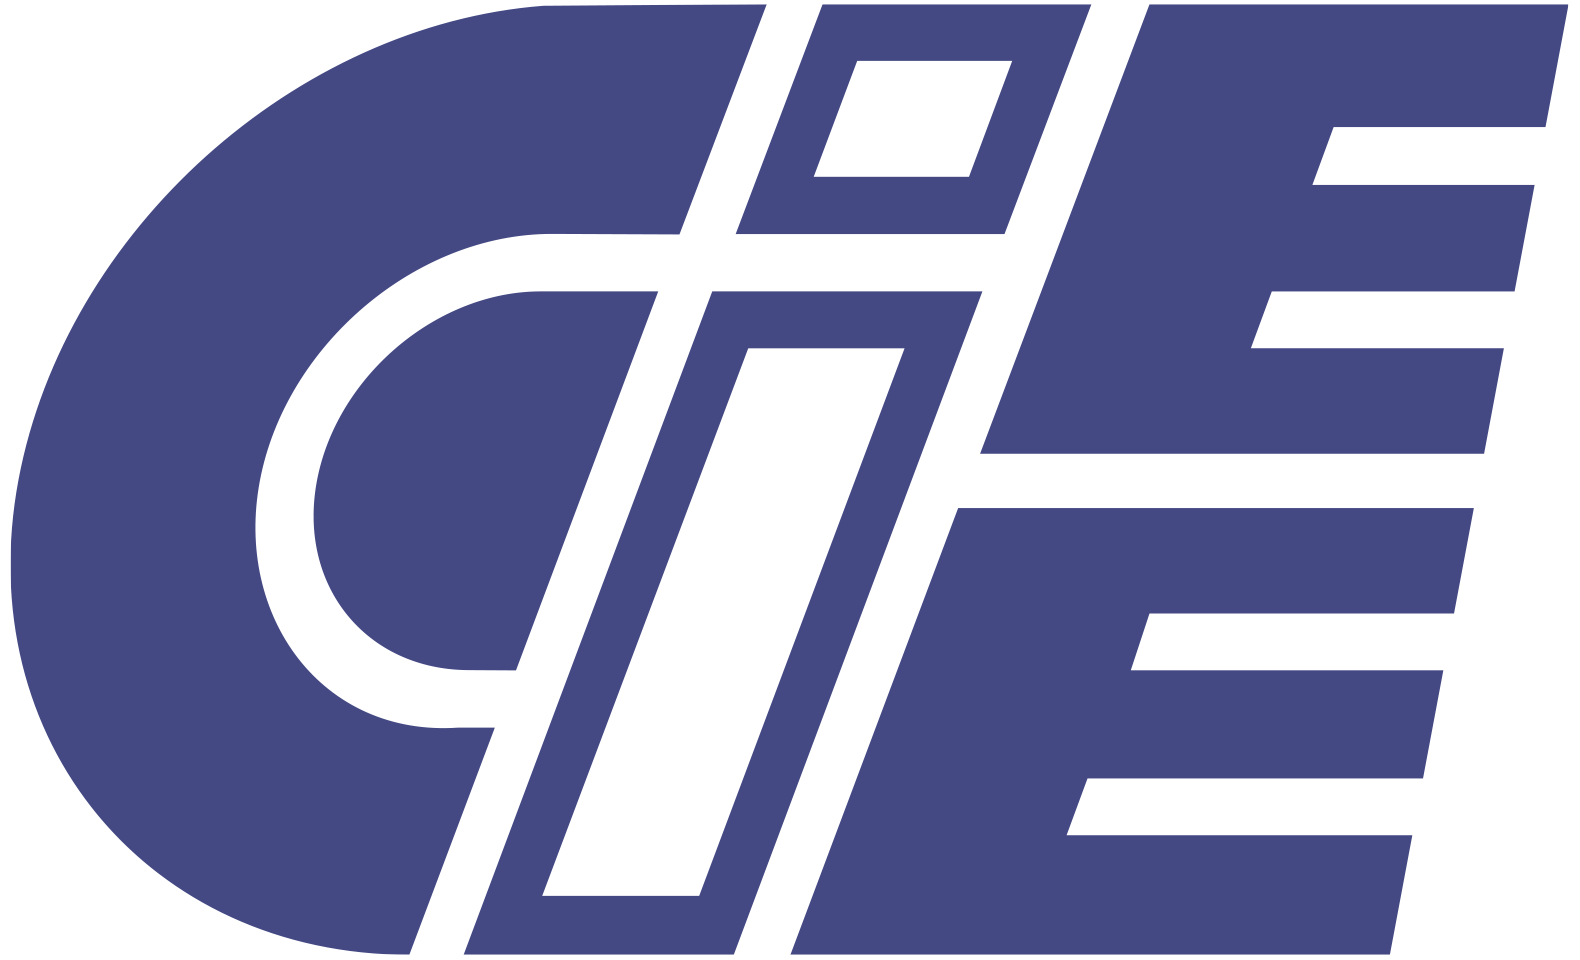 logo CIEE